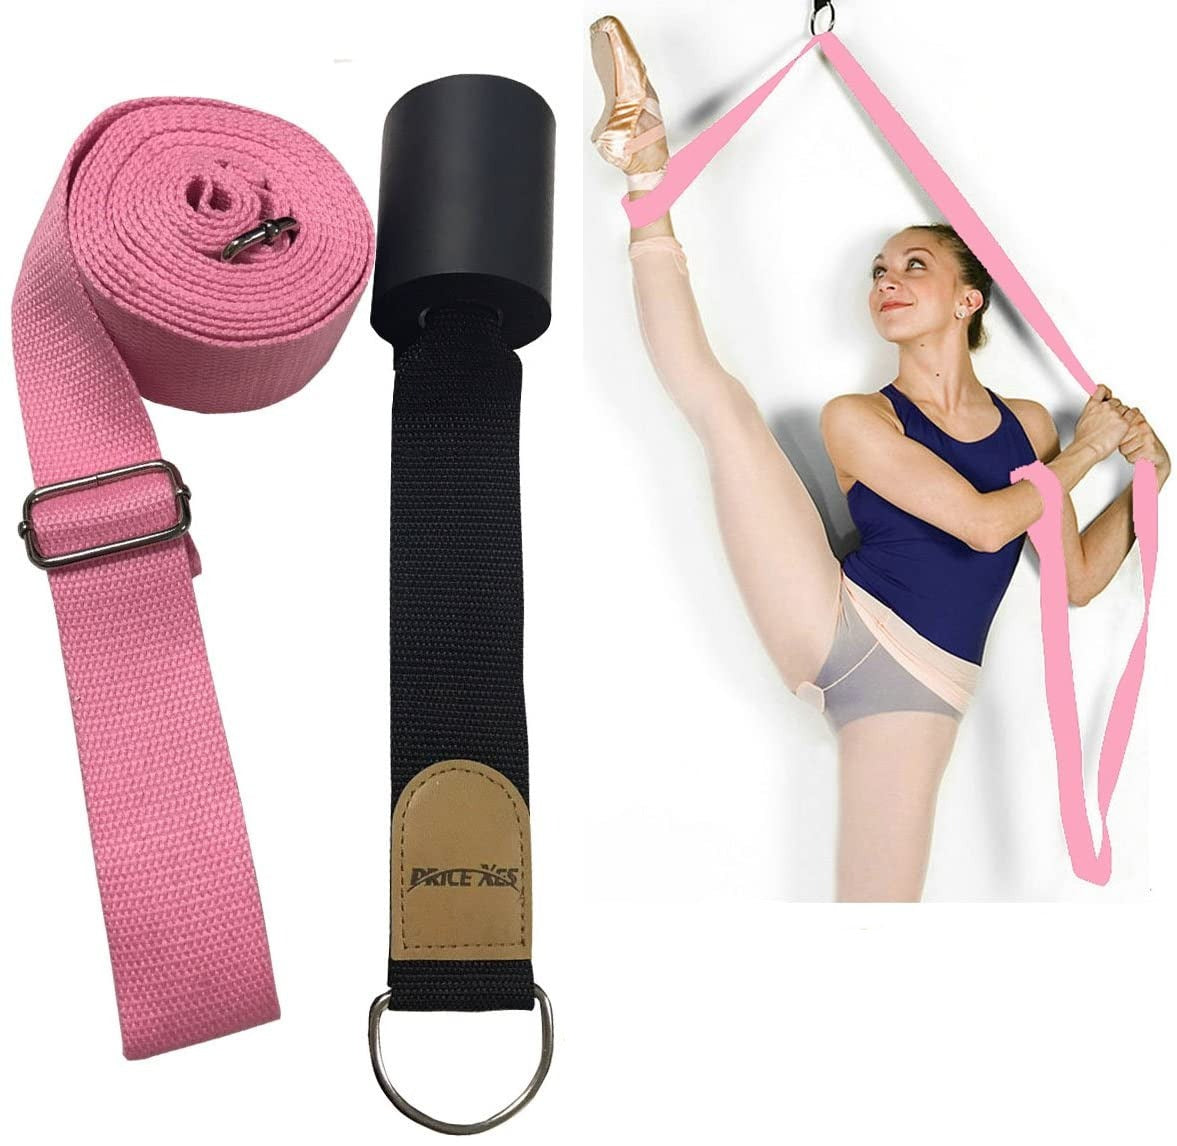 Price Xes Leg Ballet Yoga Stretcher, Door Attachment Get More Flexible, Flexibility & Stretching Leg Straps . - e4cents